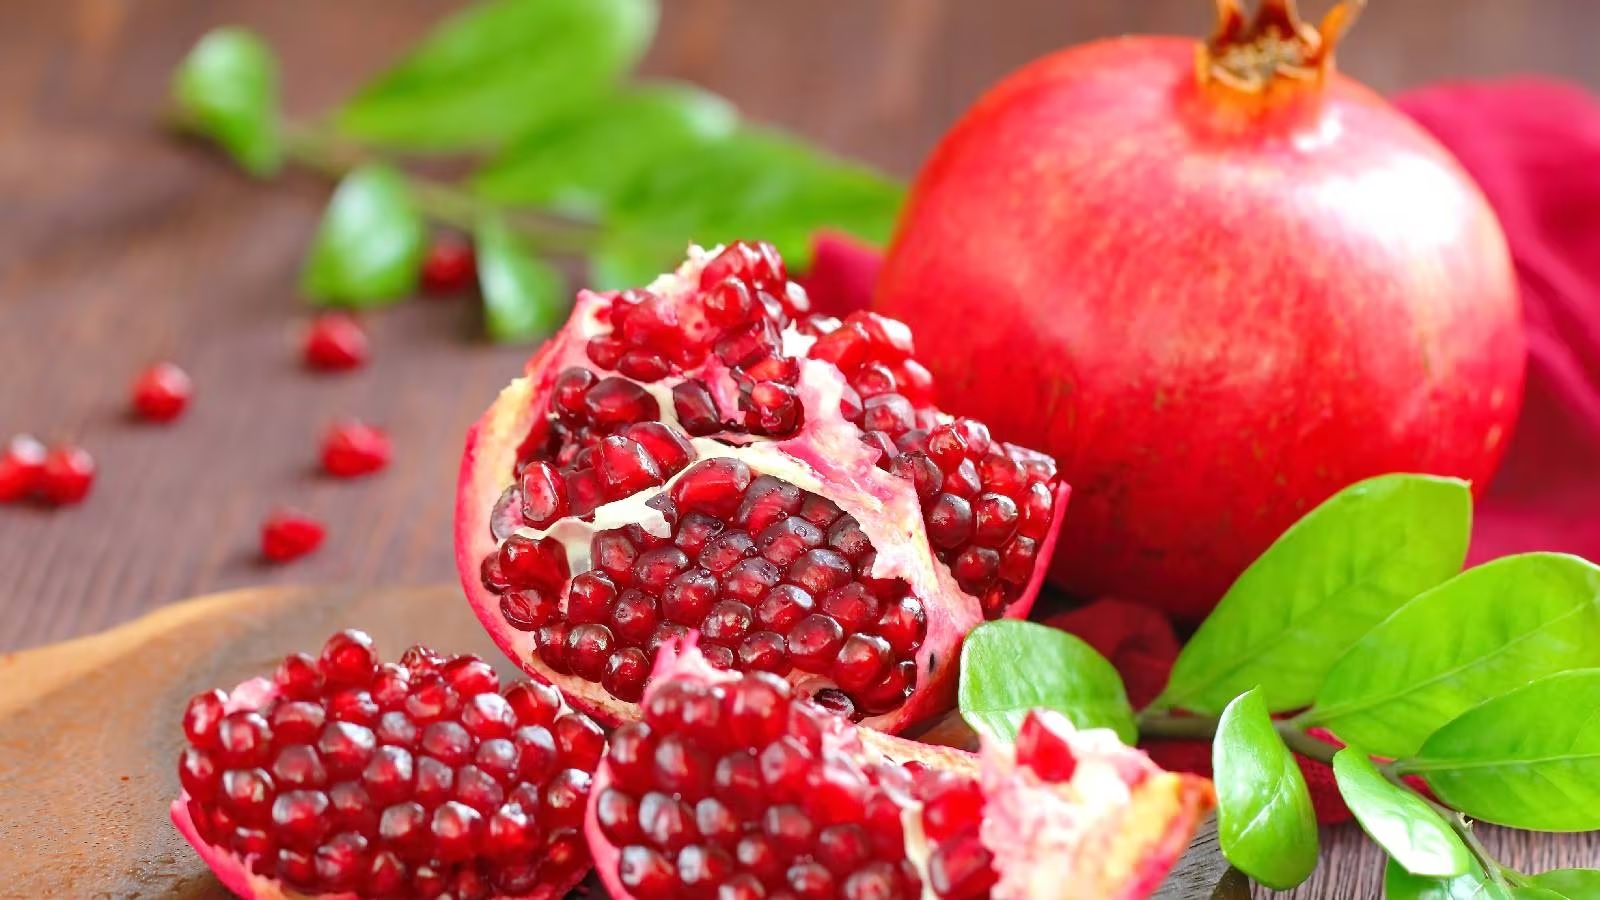 How profitable is Pomegranate farming?